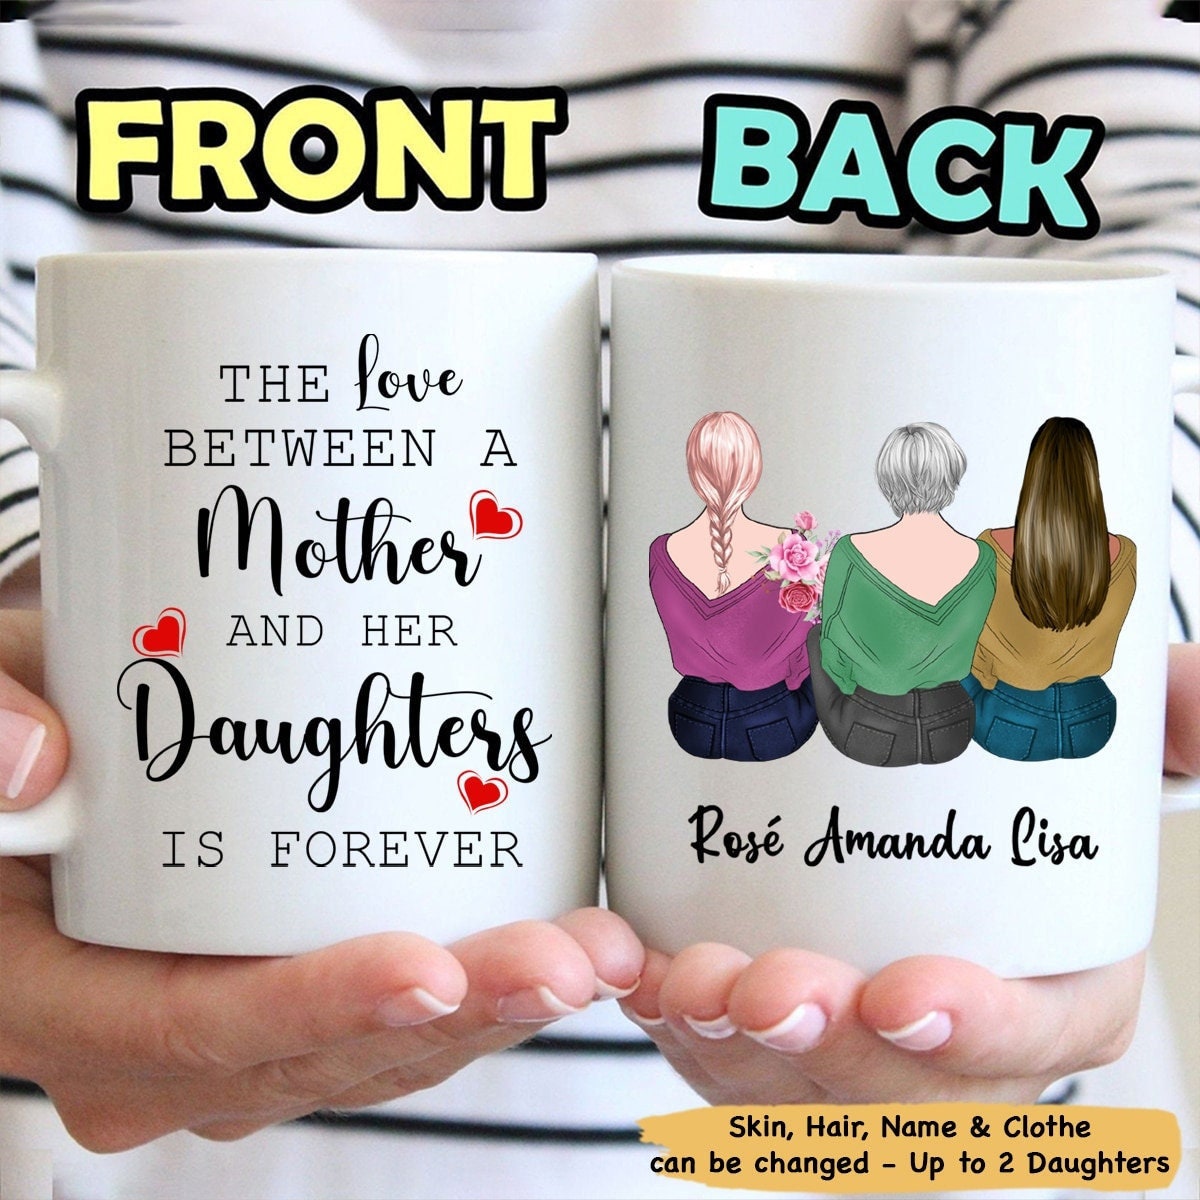 Personalized Mom Mug, Mother & Daughter Forever Linked Together